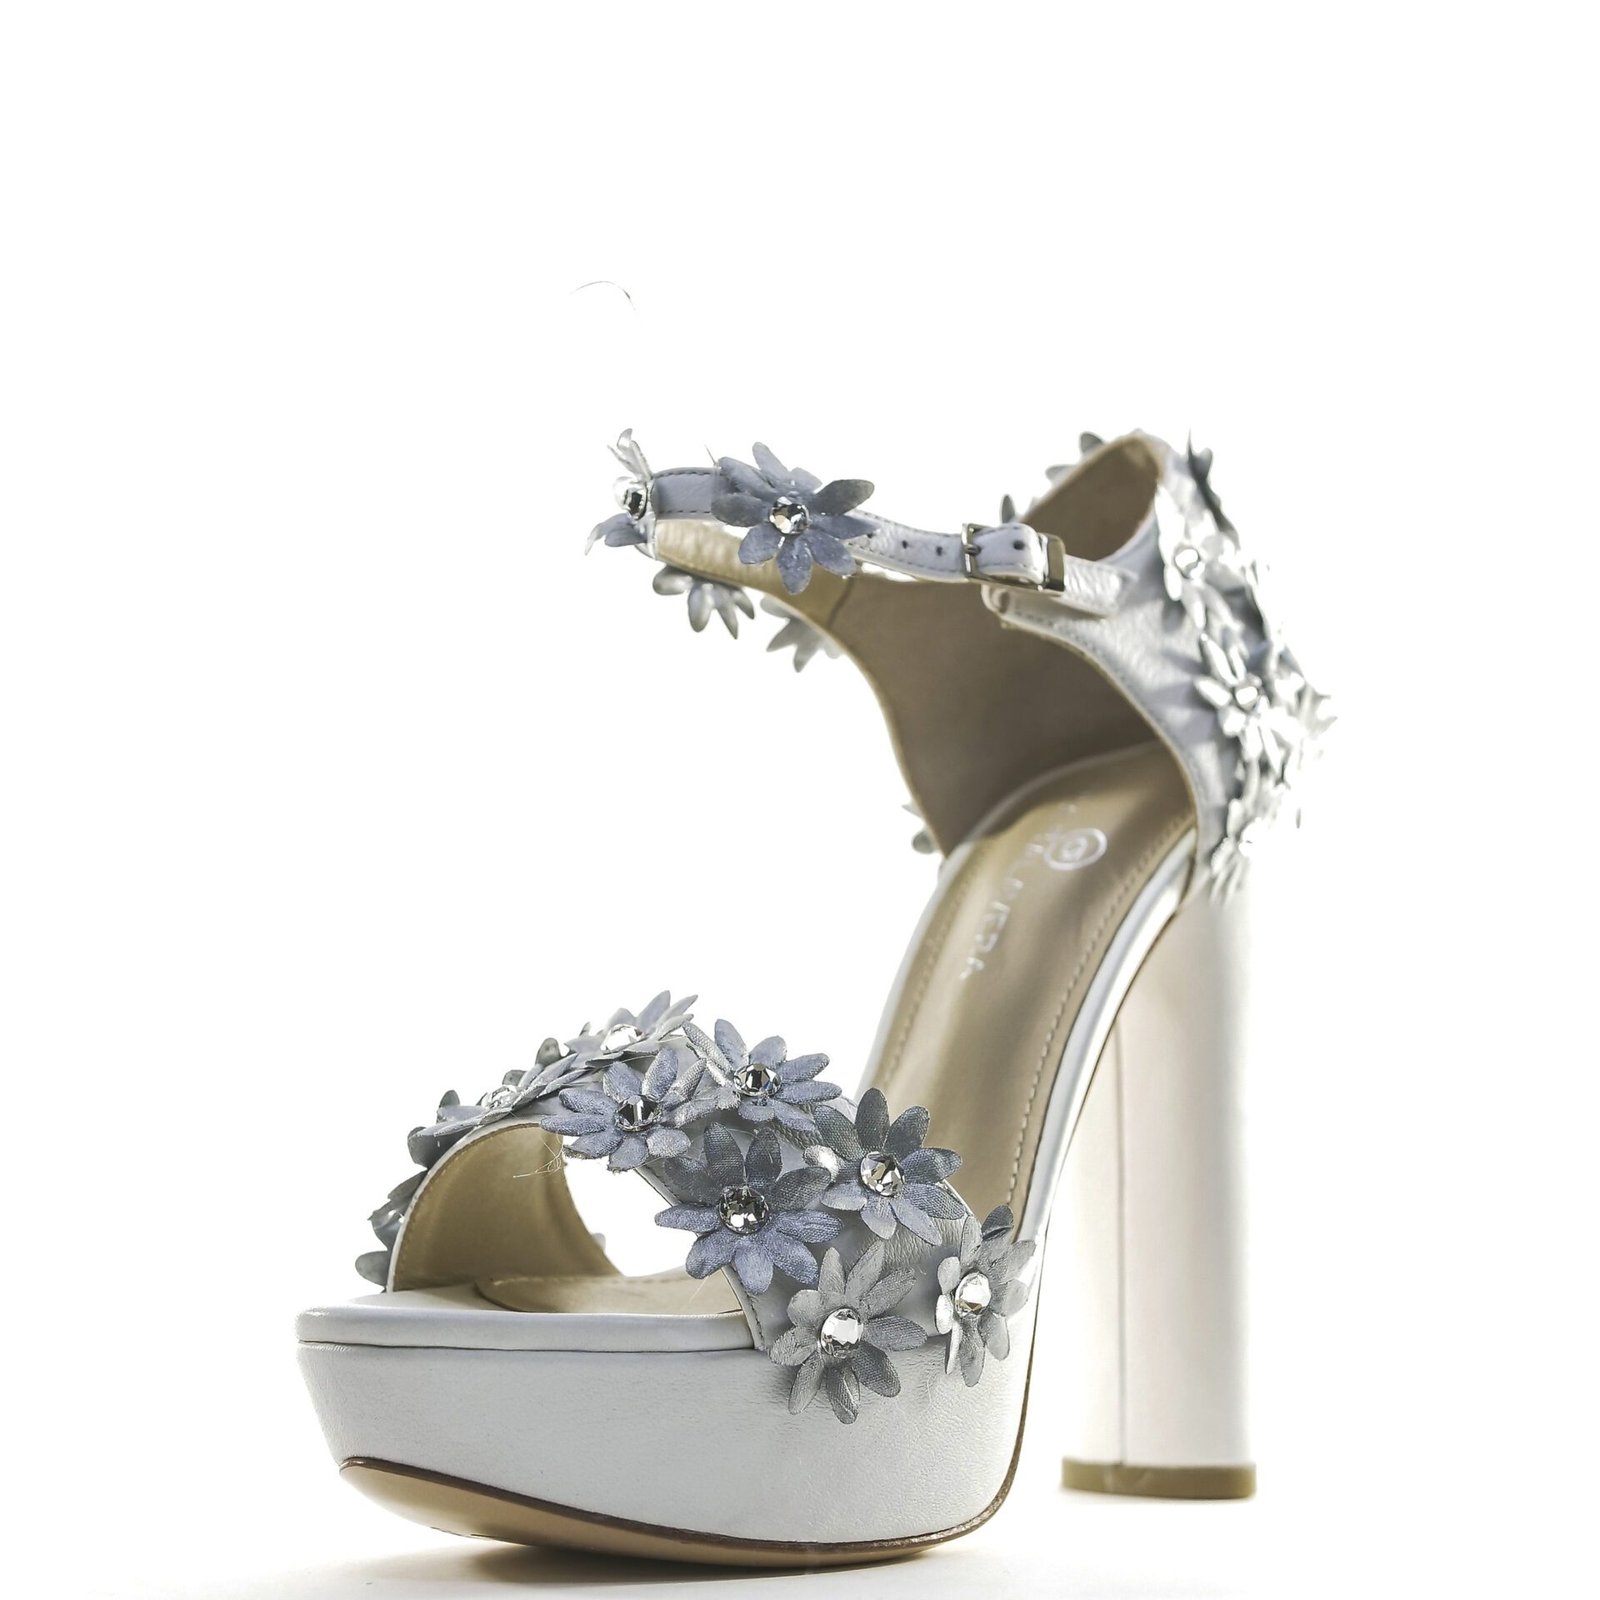 White & silver wedding sandal